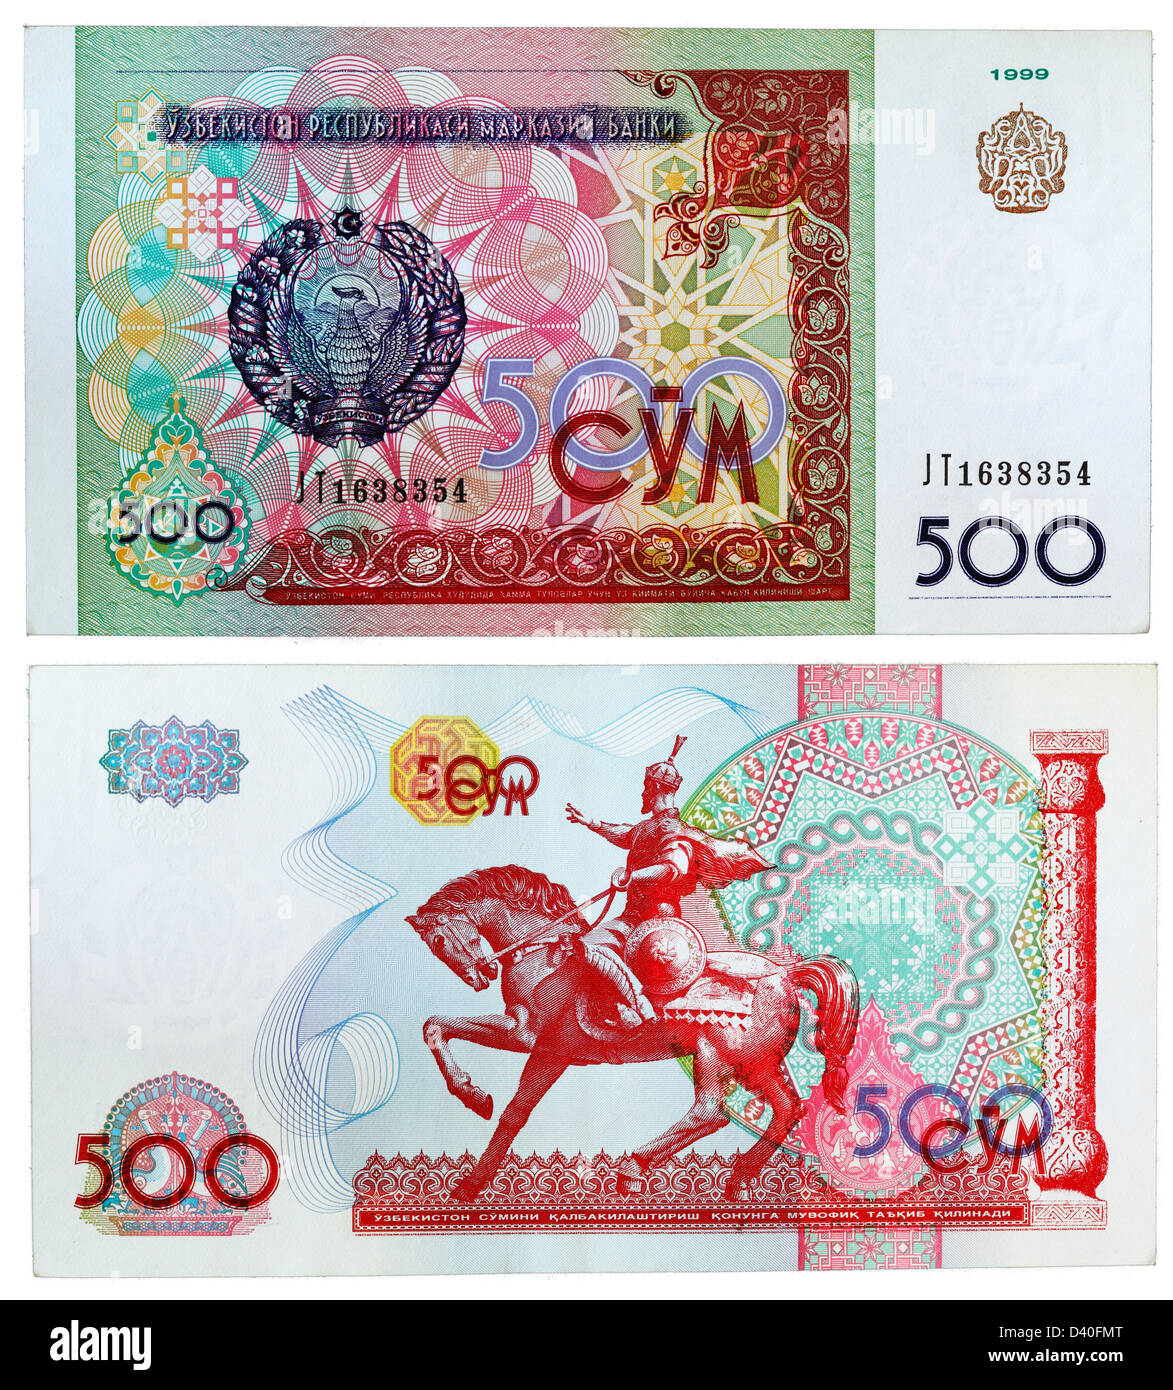 500 Som banknote, Statue of Amir Timur in Tashkent, Uzbekistan, 1999 Stock Photo